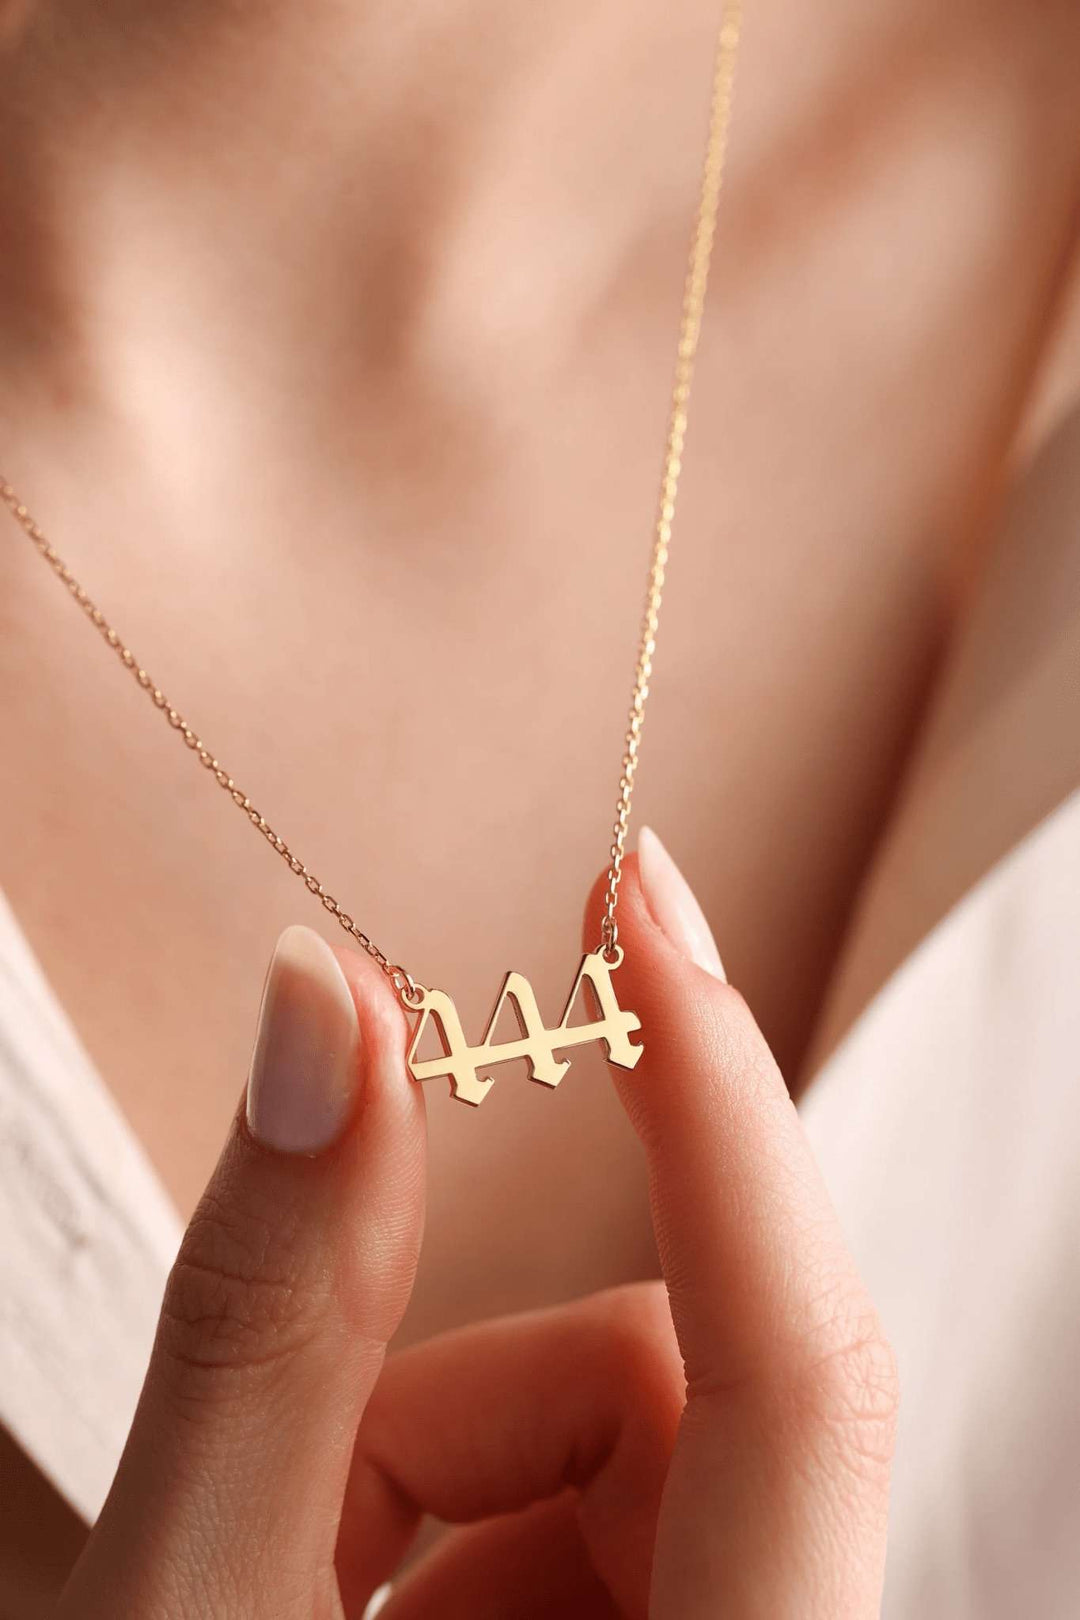 Angel Number Necklace, 555 Necklace, 444 Necklace